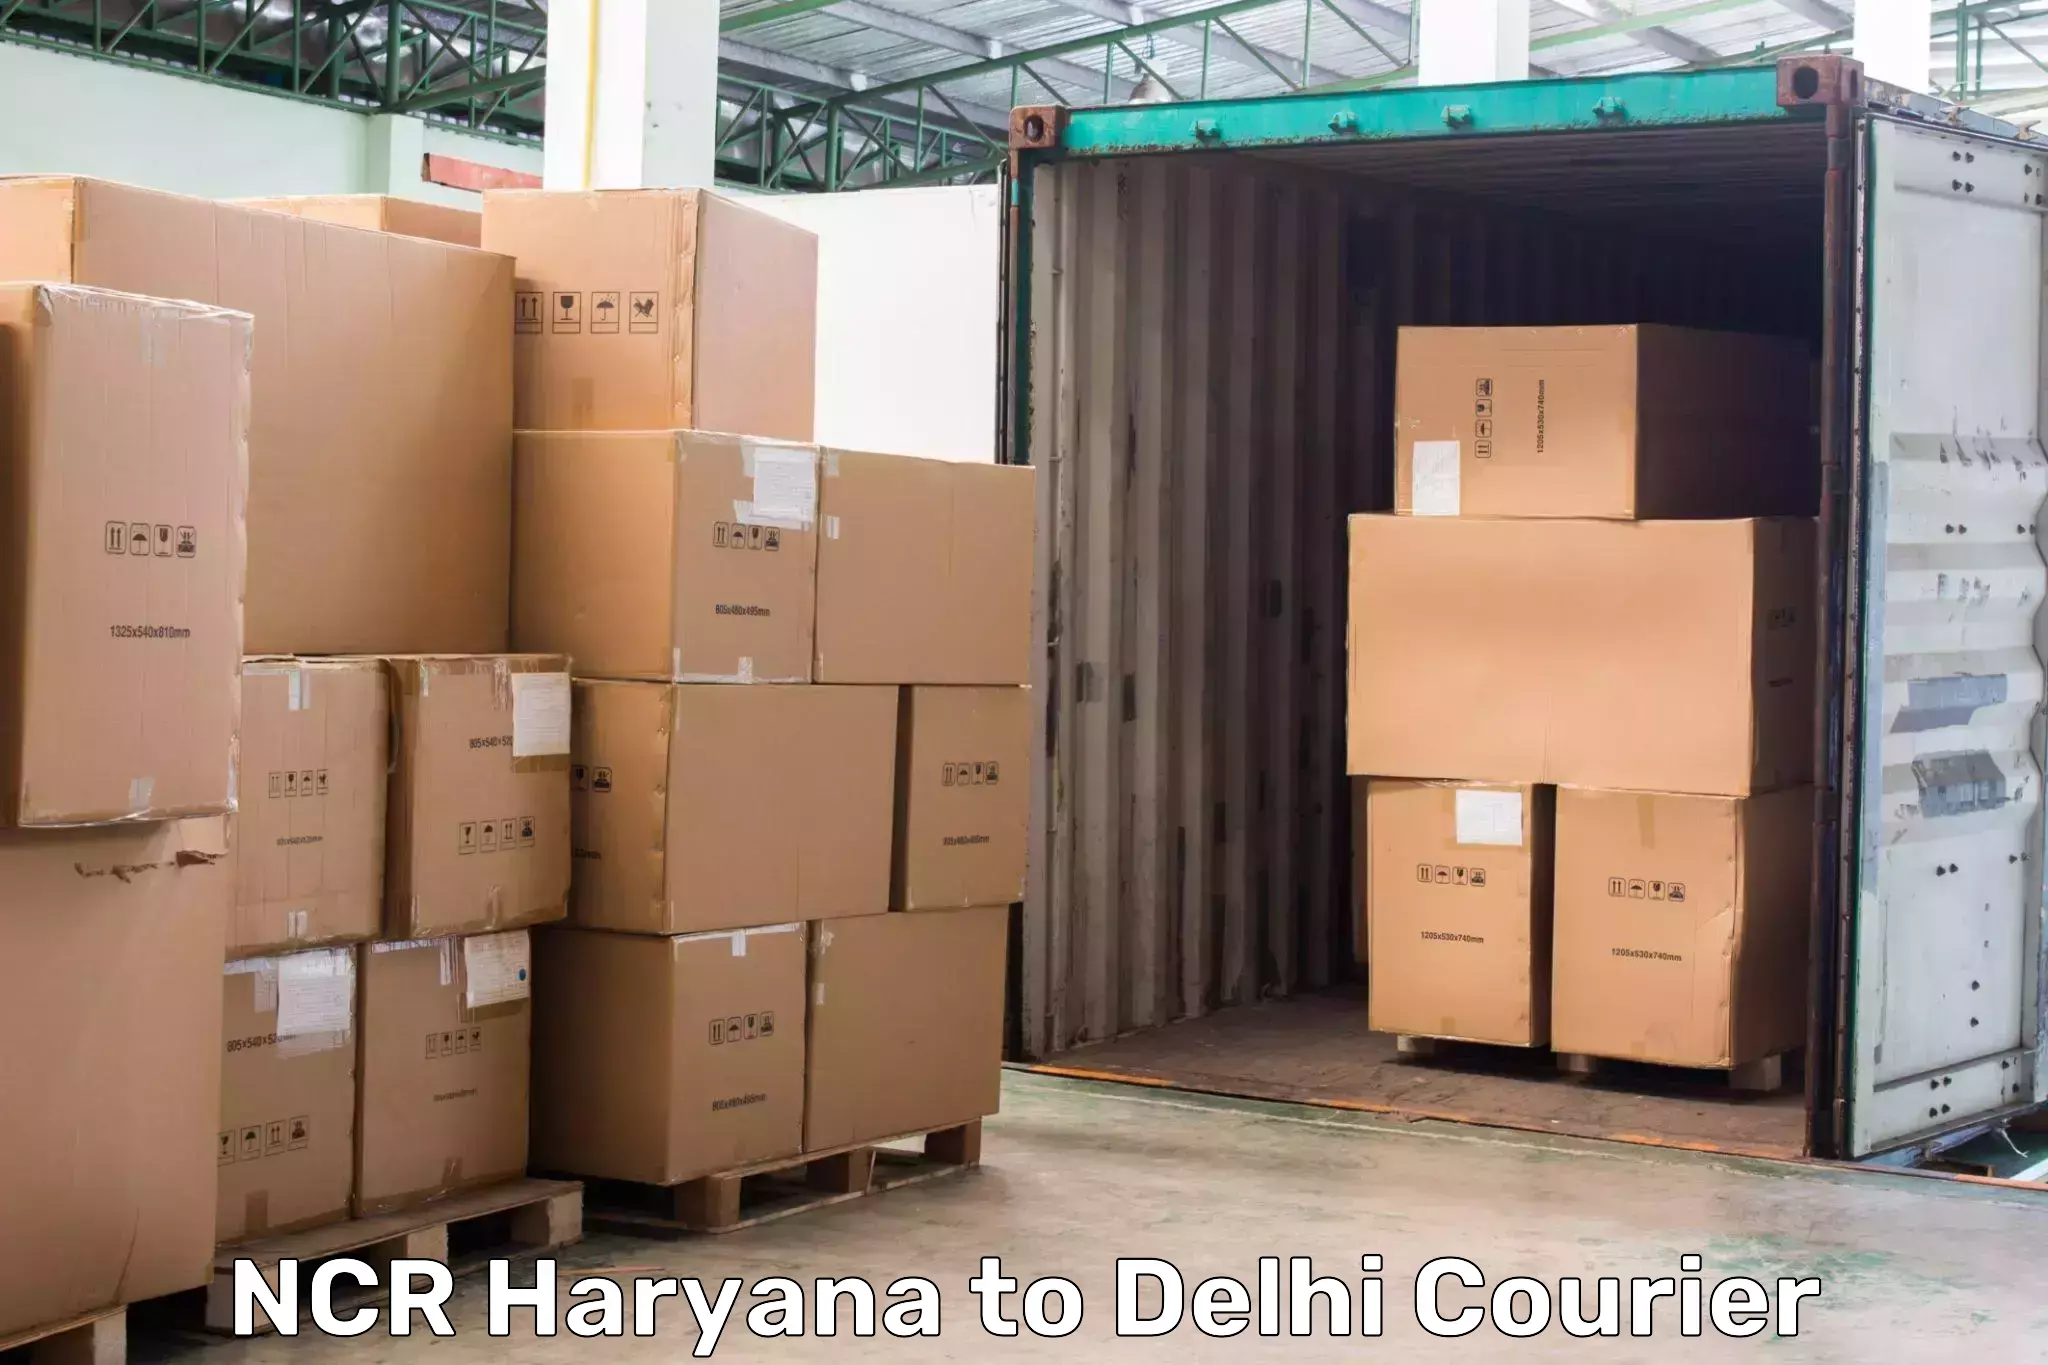 Express mail service NCR Haryana to IIT Delhi